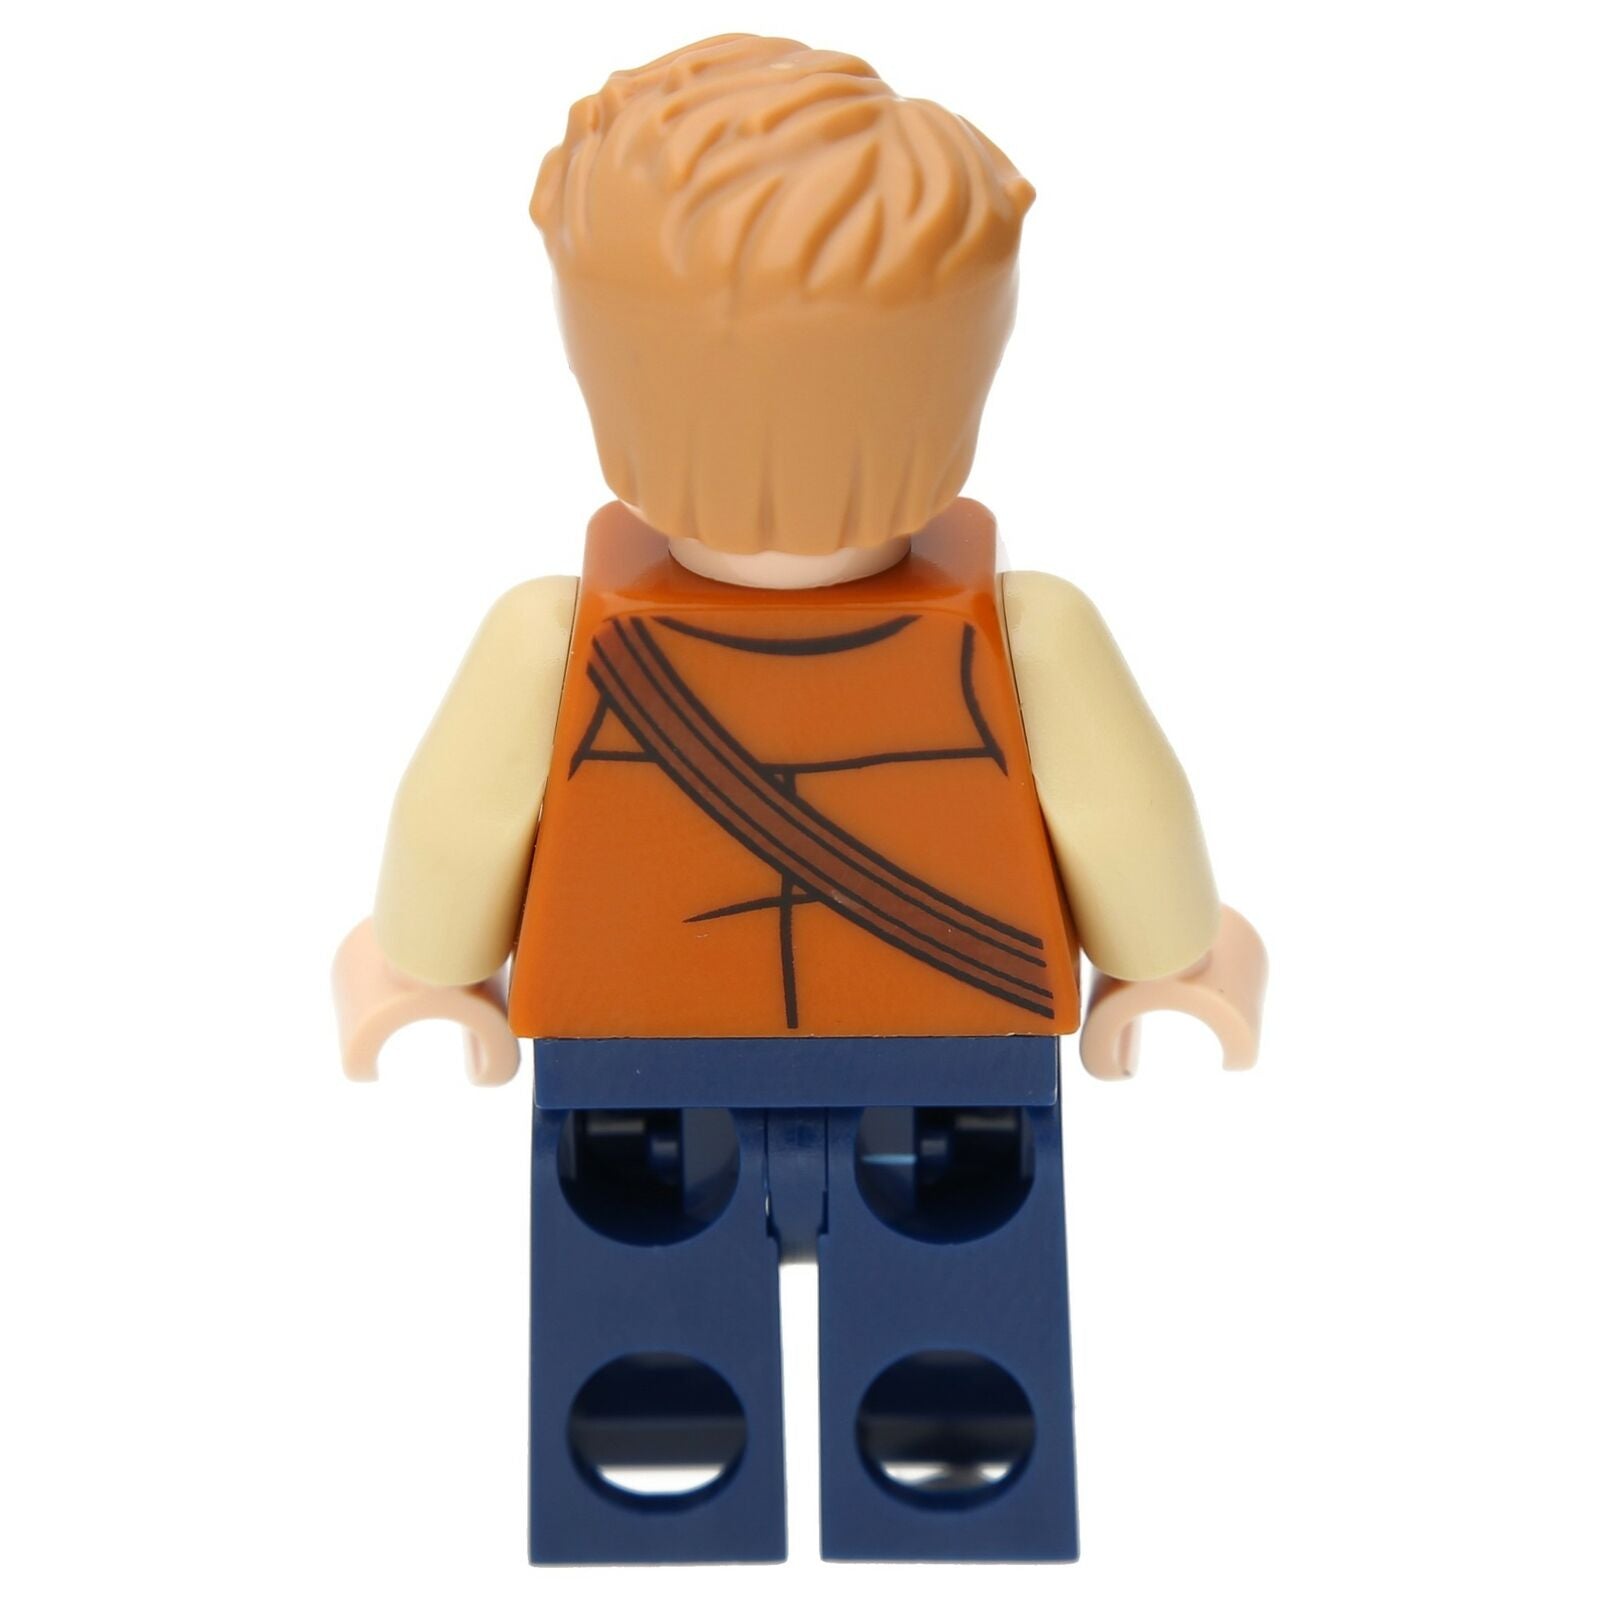 LEGO Jurassic World Minifigure - Owen Grady (Lime Canisters)